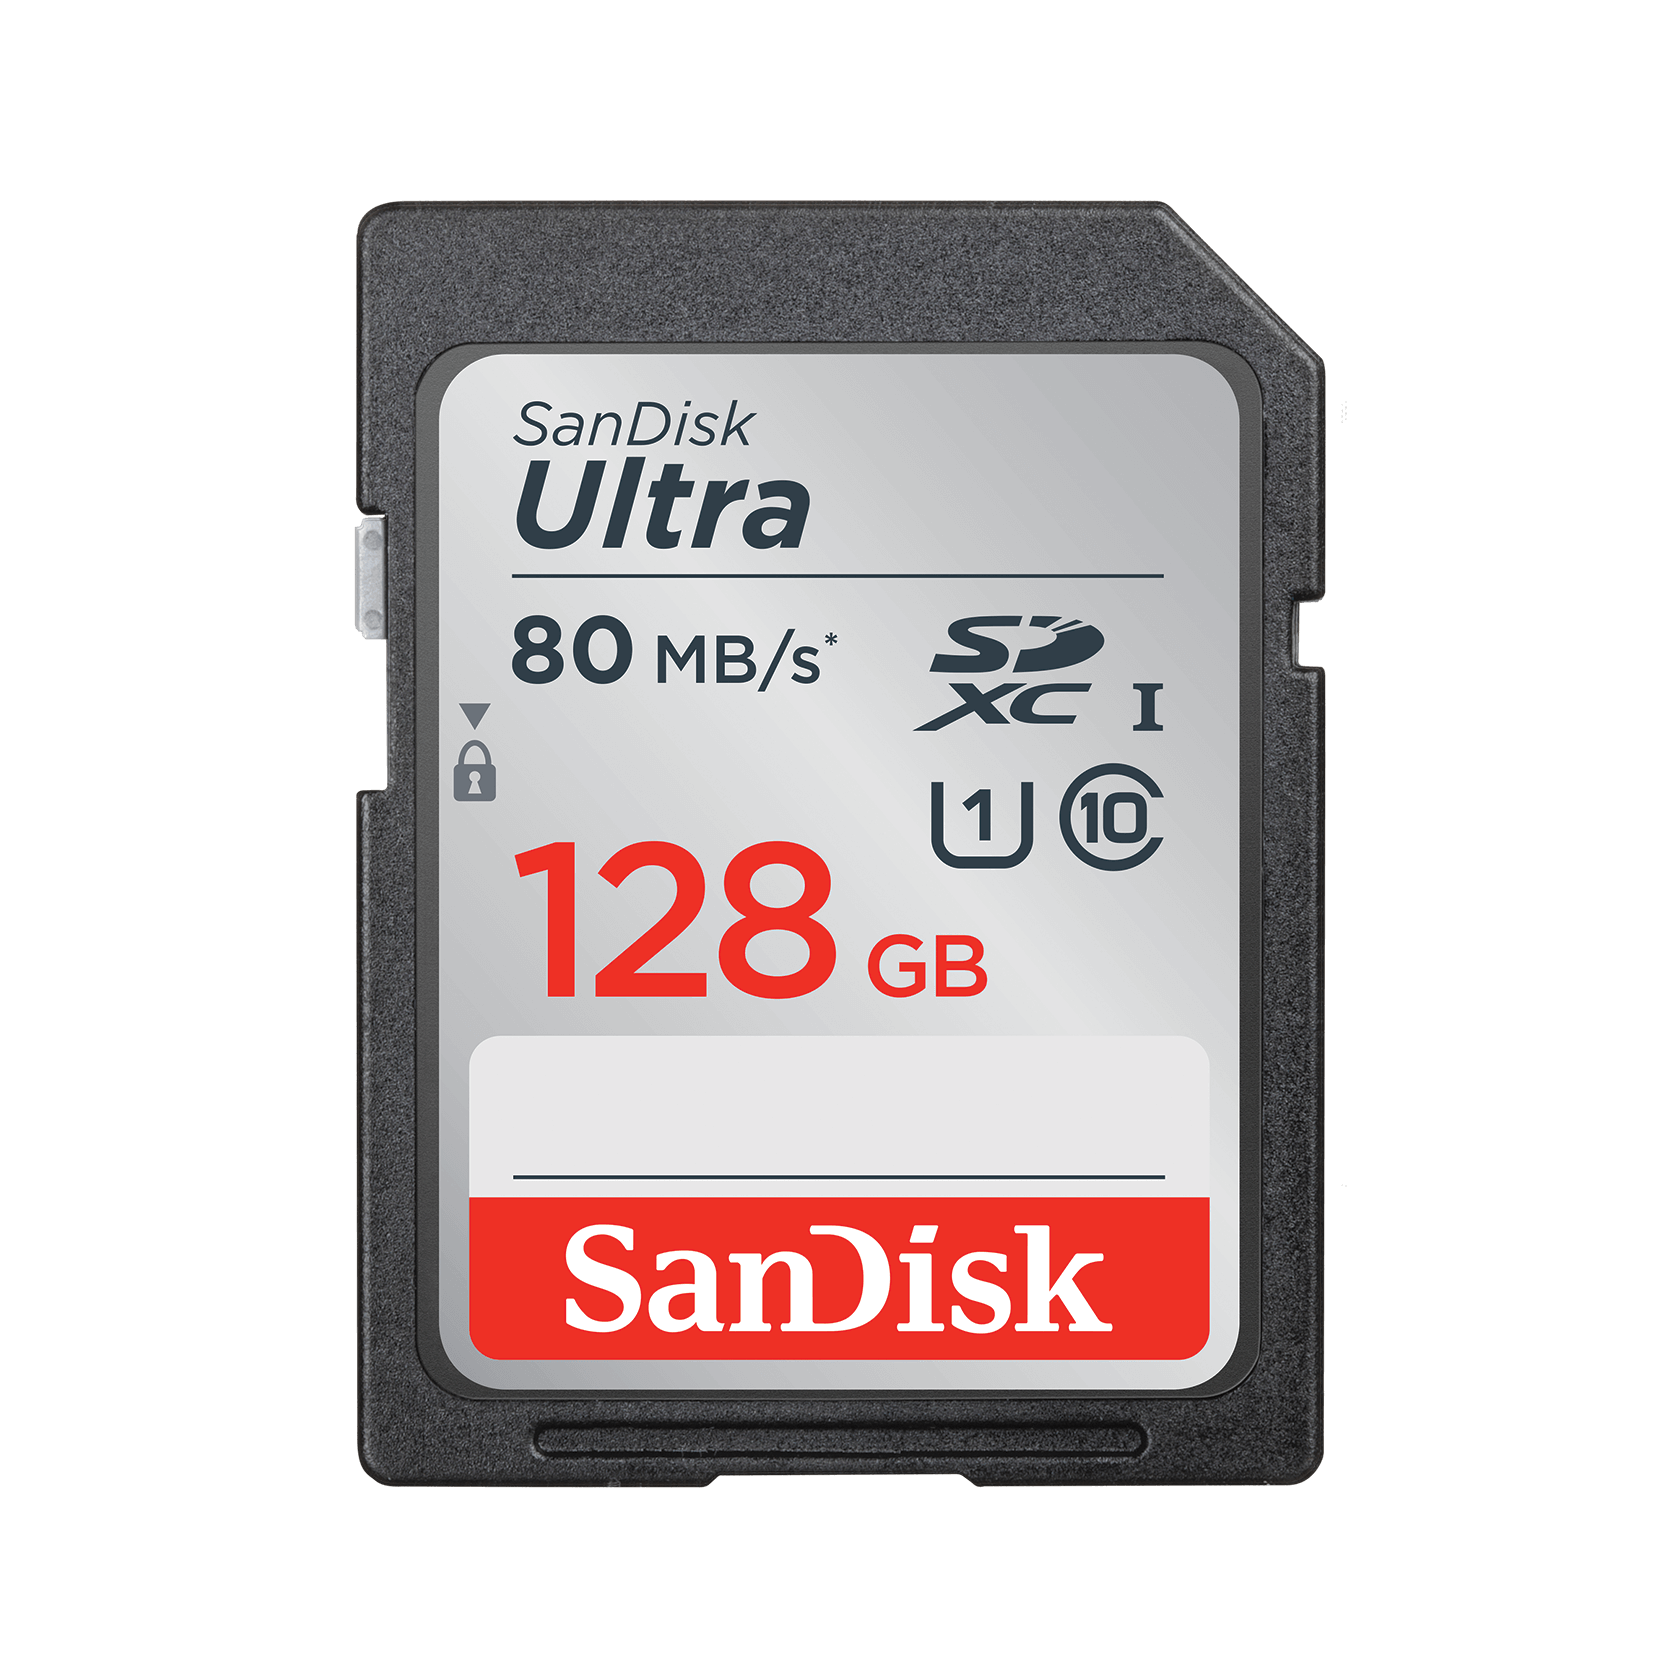 SanDisk Ultra SDHC/SDXC Memory Card 128GB - SDSDUNC-128G-AN6IN